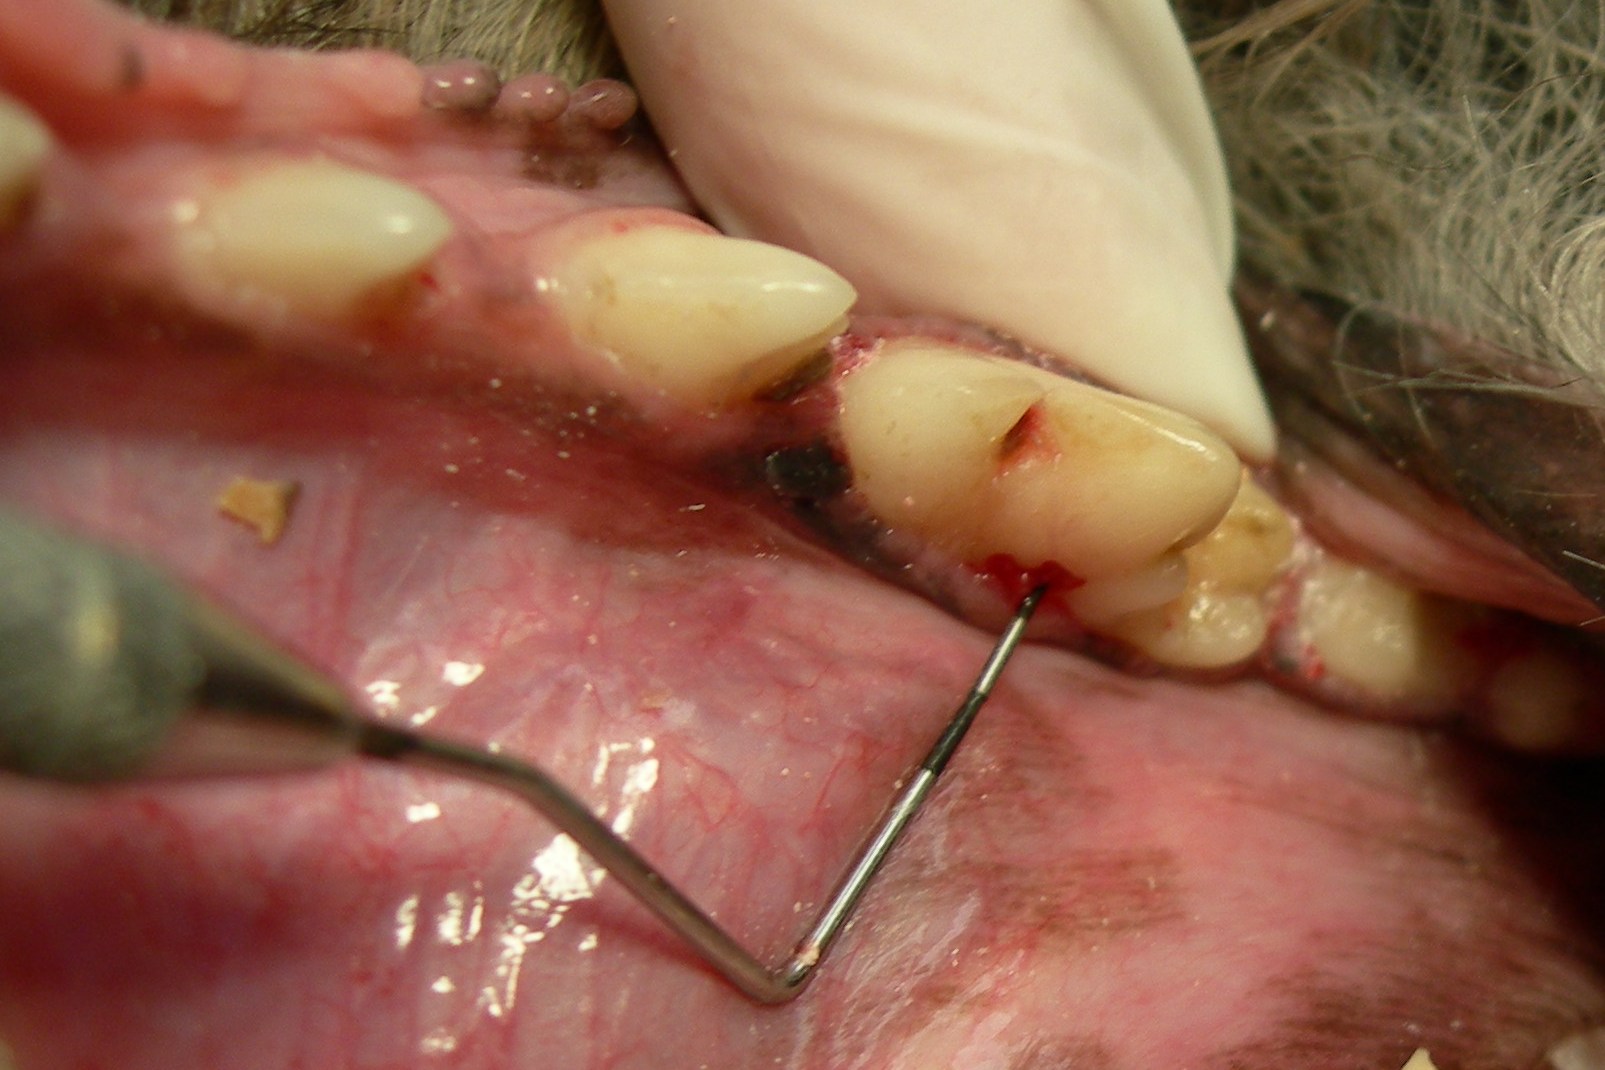 Rare finding, a cavity on a molar